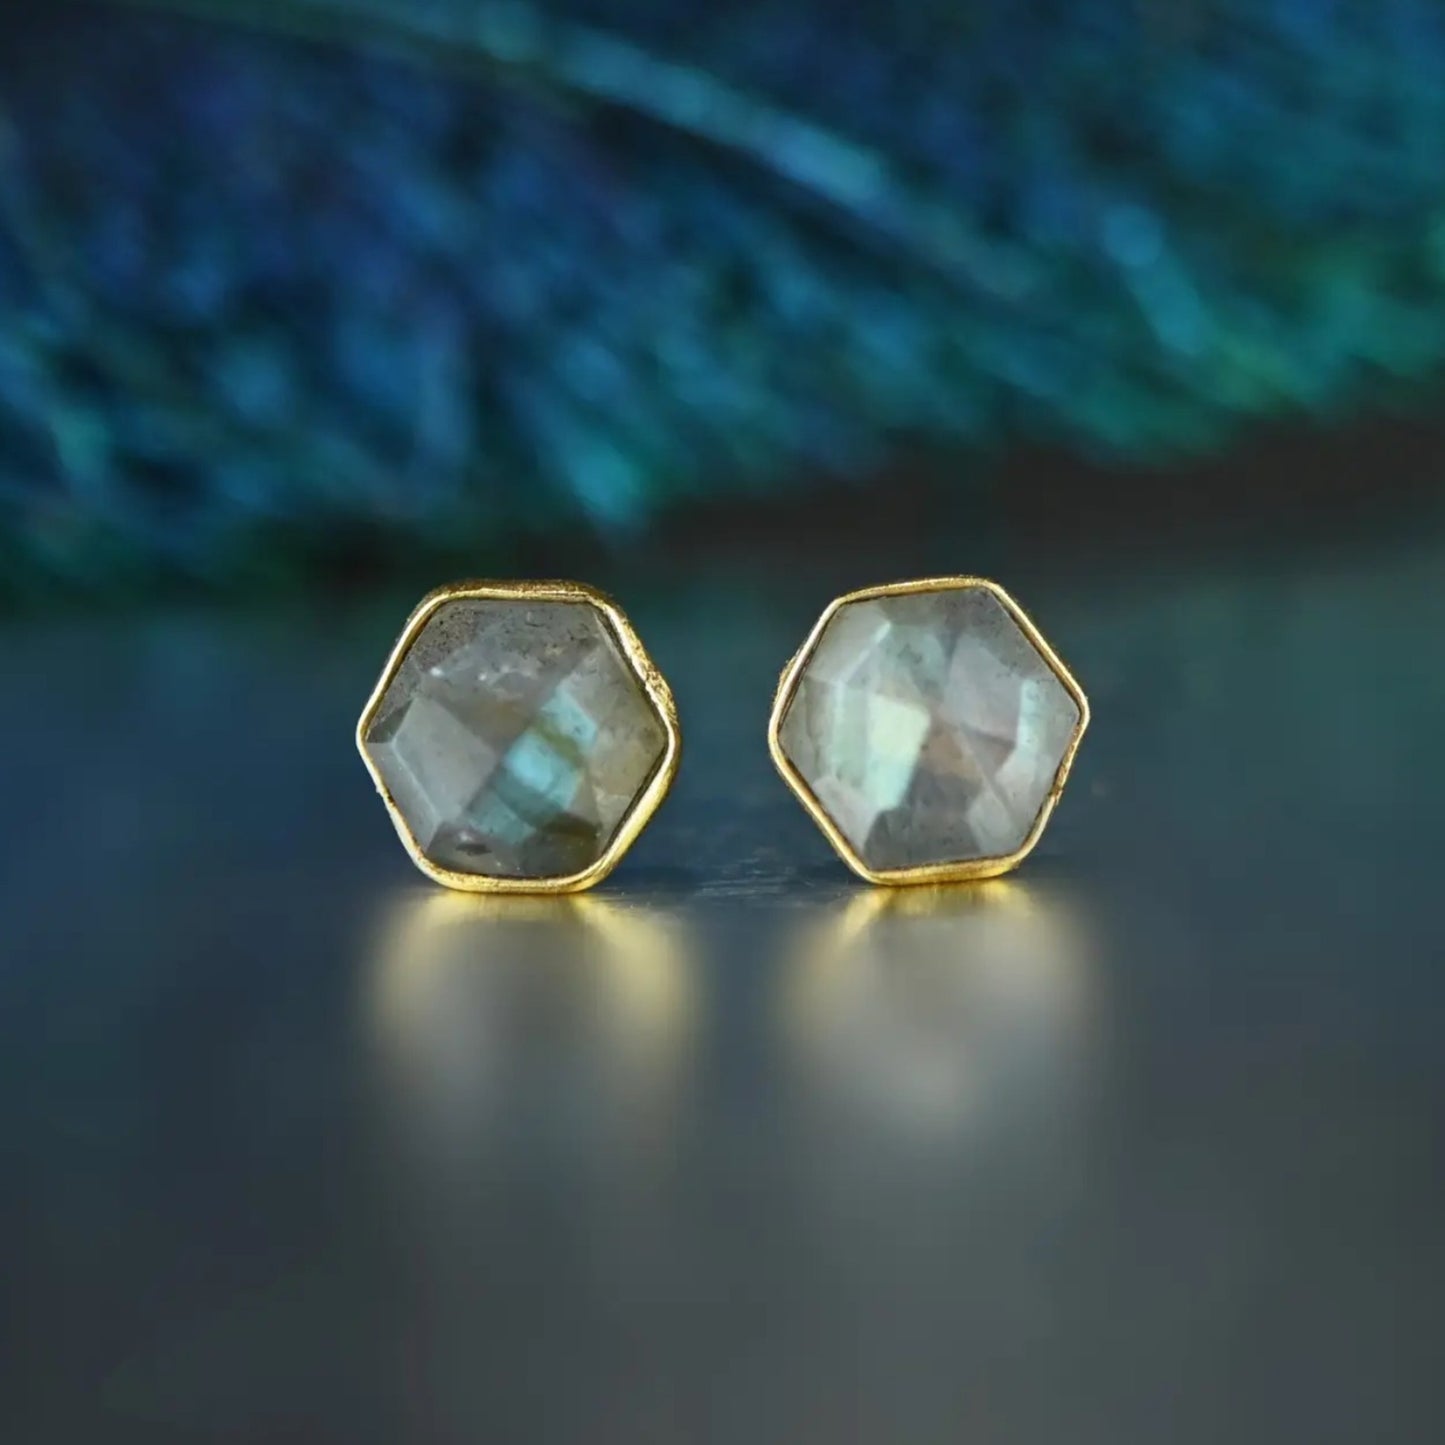 KBD Studio Hexagon Gemstone Stud Earrings - Multiple Colors